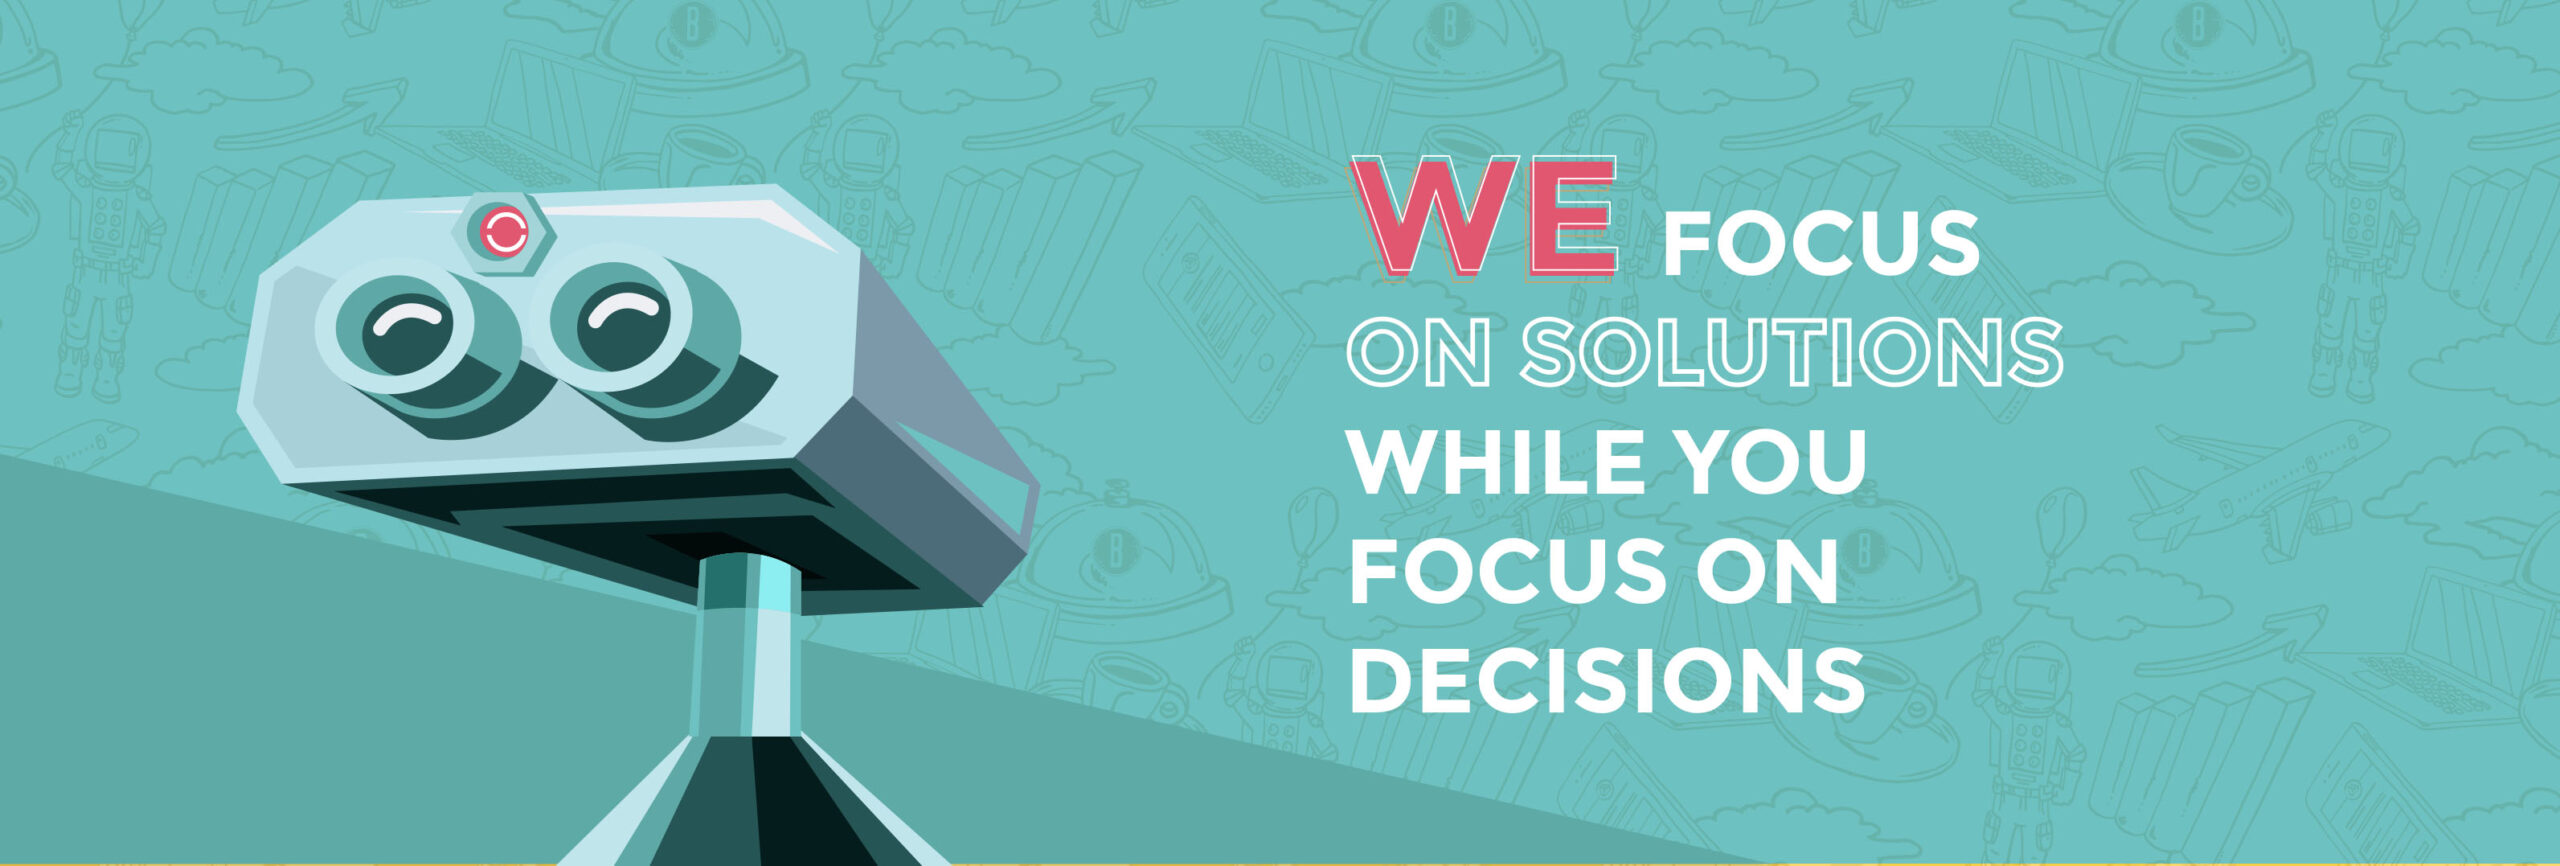 Focus_On_Solutions_dsktp